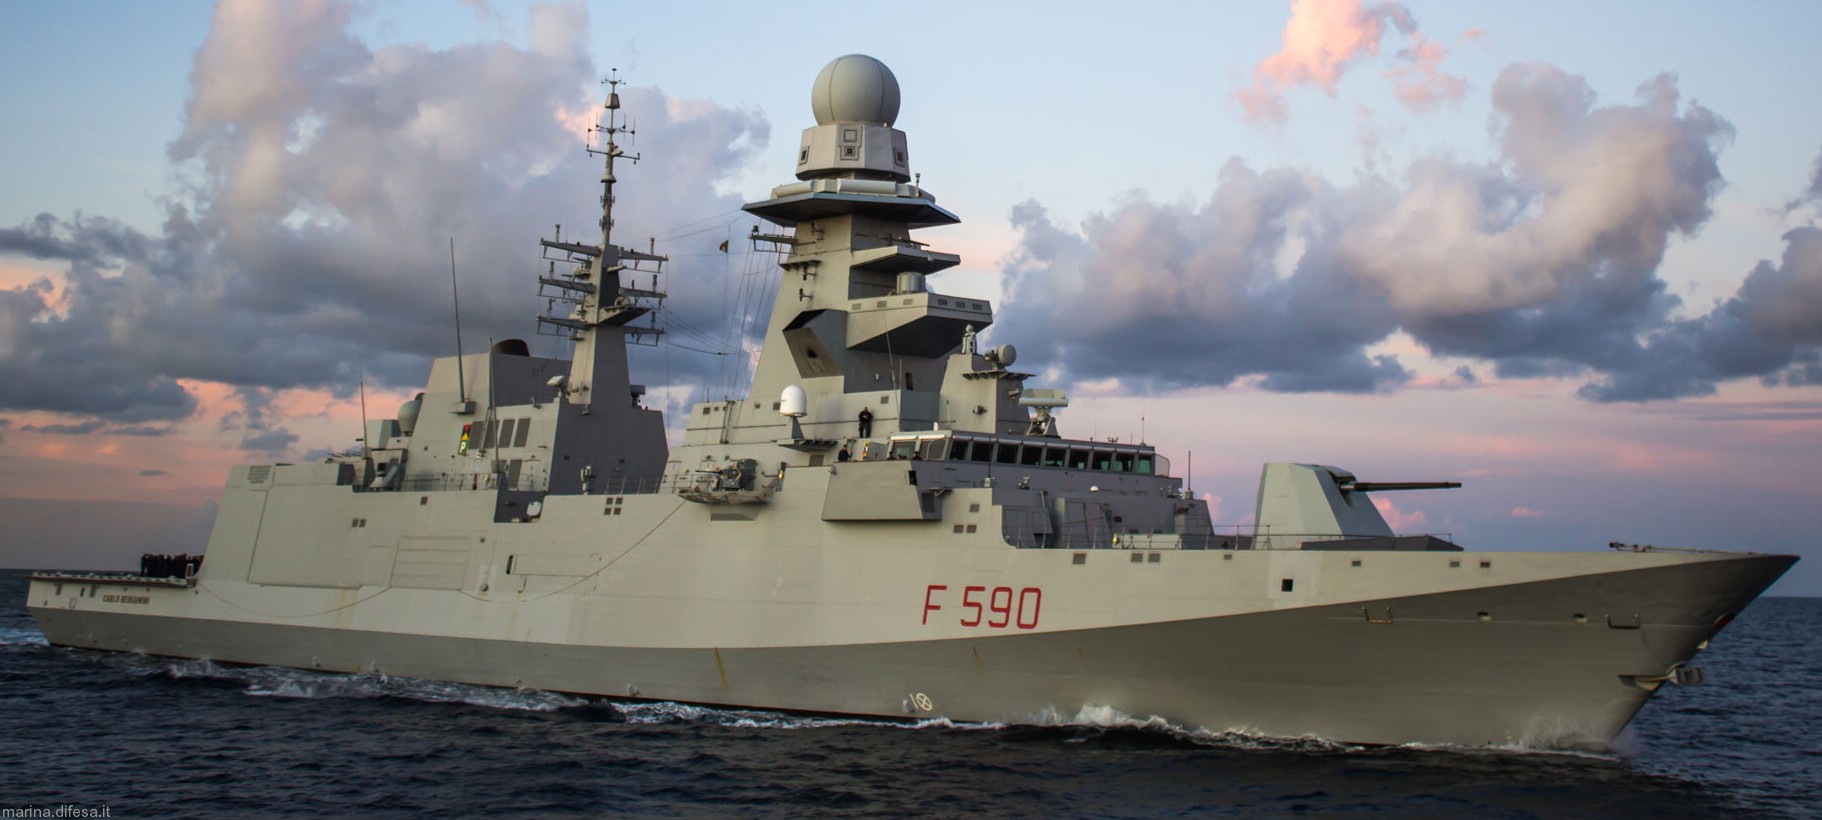 f-590 carlo bergamini its nave fremm class guided missile frigate italian navy marina militare 50